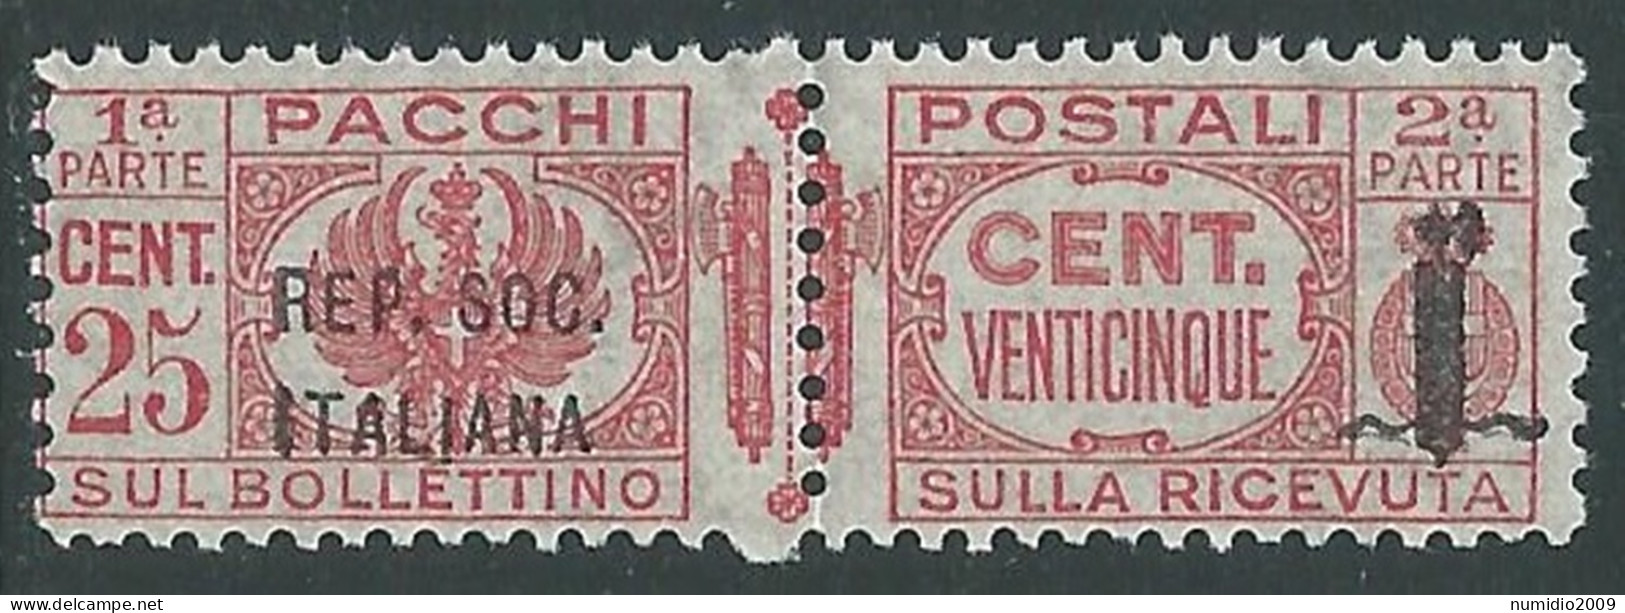 1944 RSI PACCHI POSTALI 25 CENT MNH ** - P29-5 - Postal Parcels